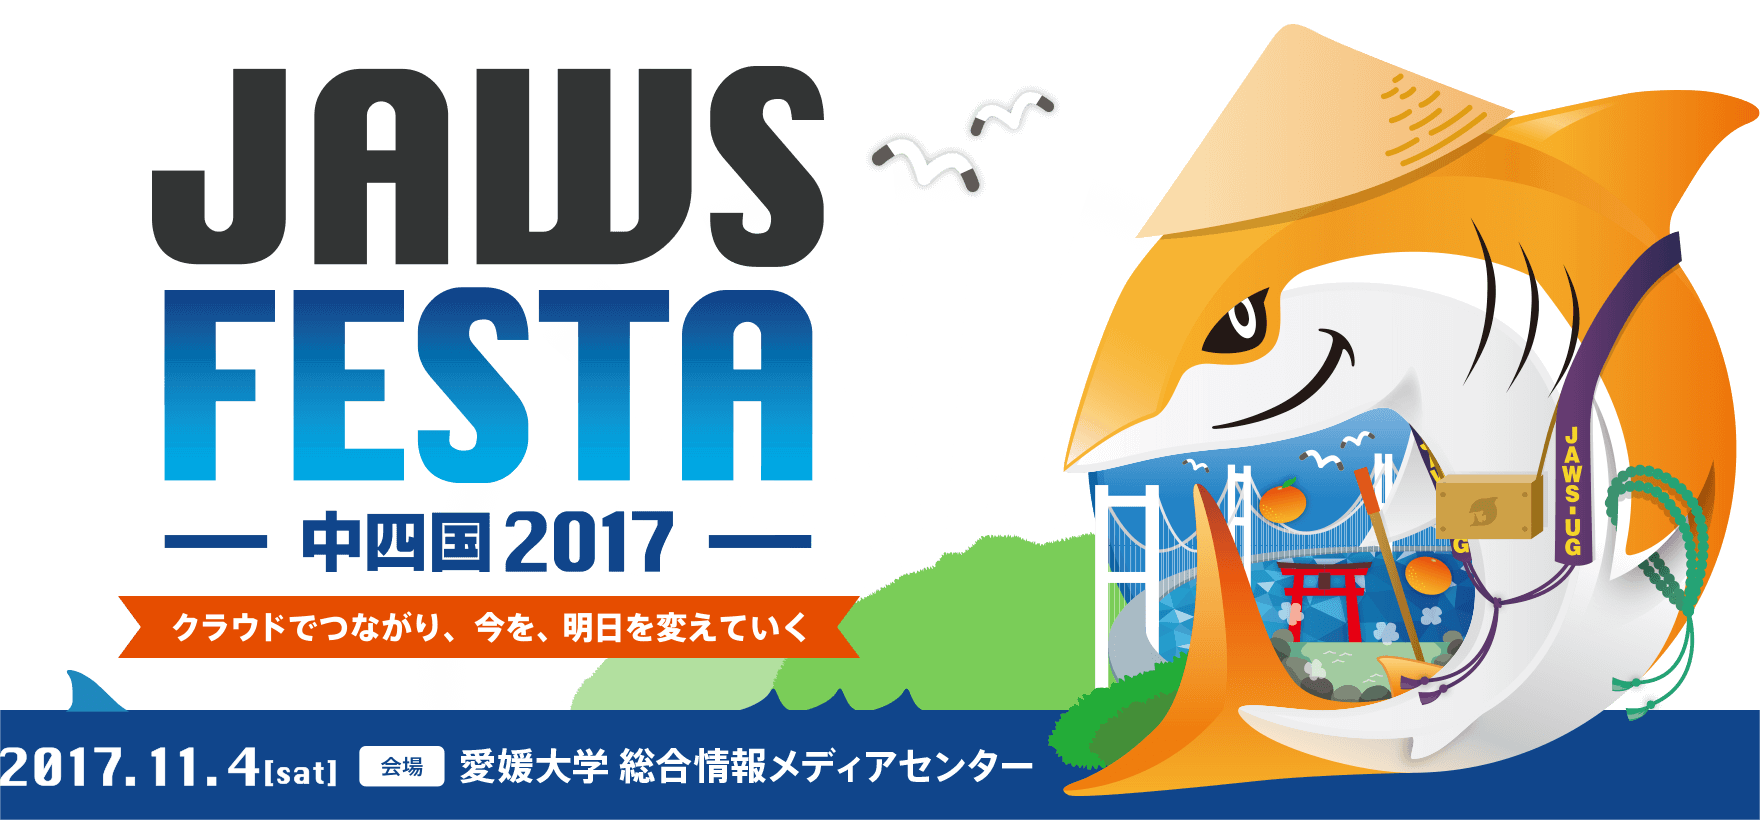 JAWS FESTA 中四国 2017